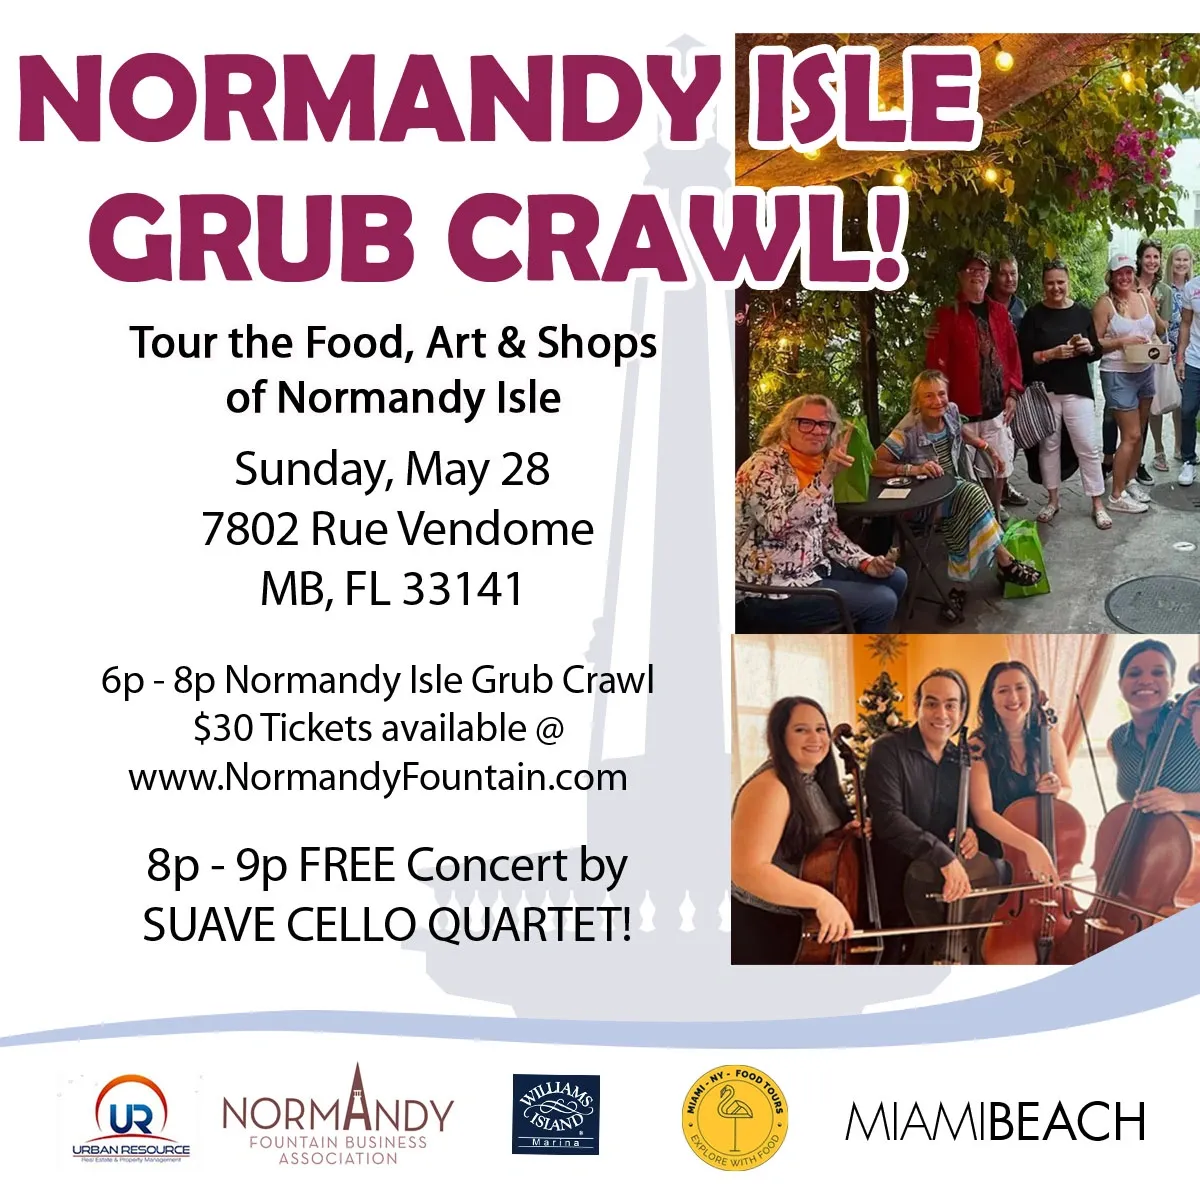 Normandy Isle Grub Crawl